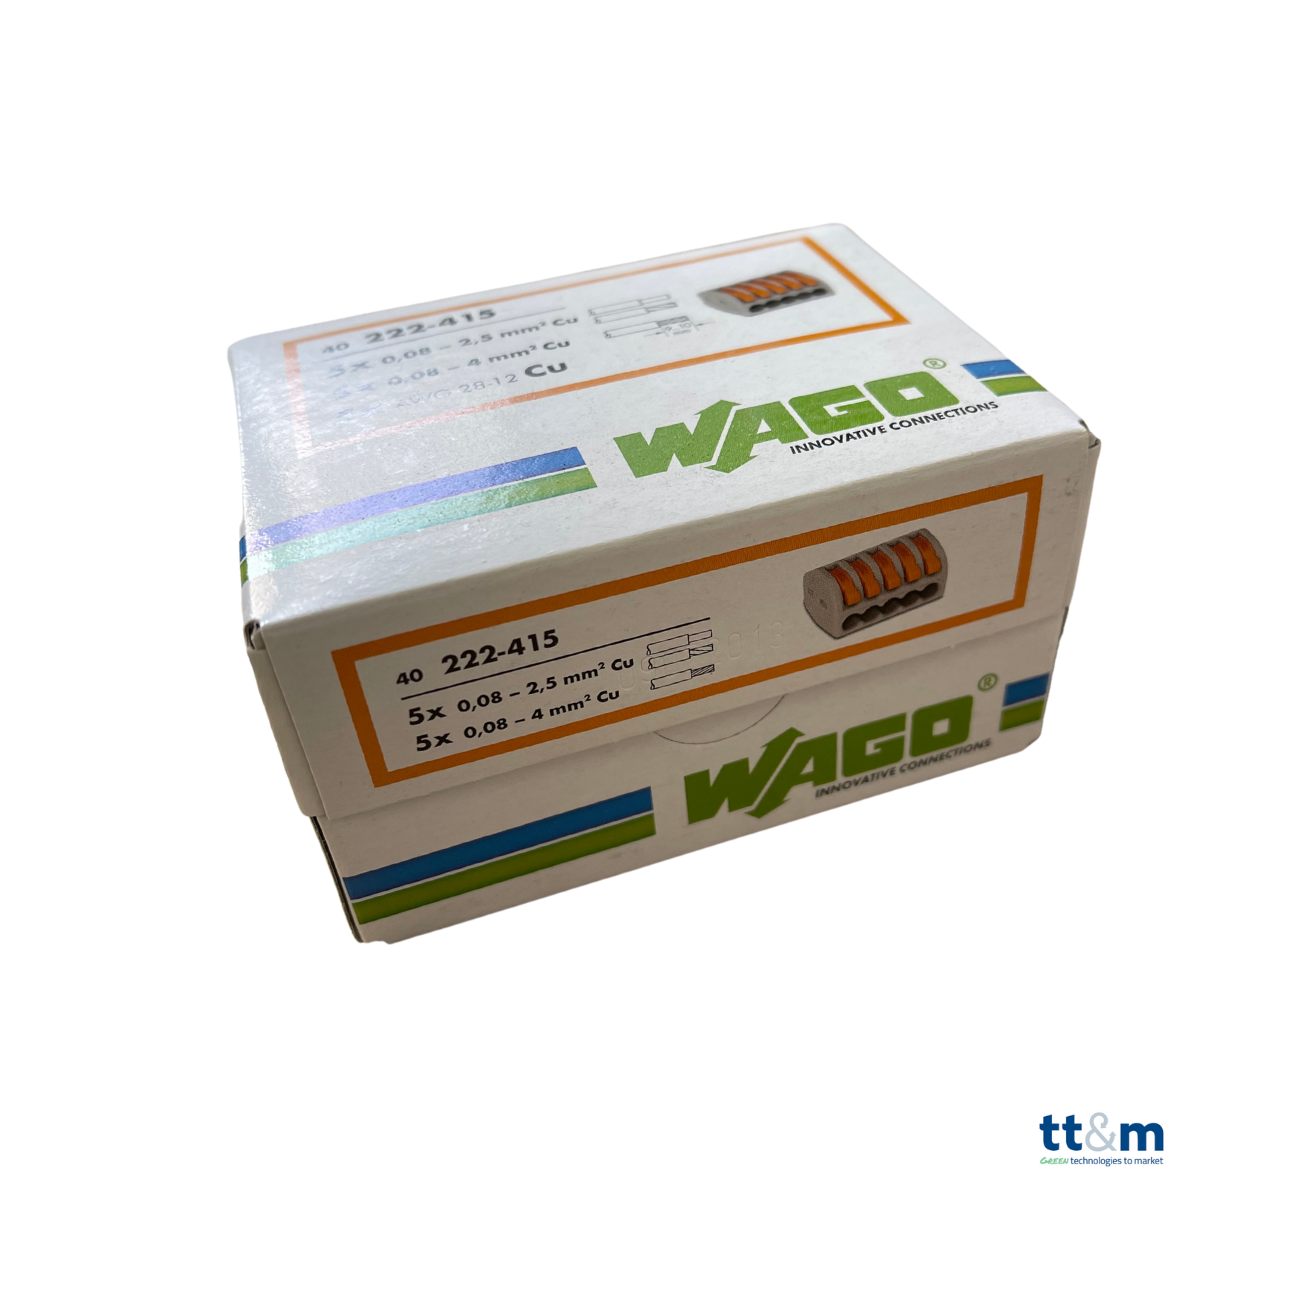 WAGO Verbindungsklemme 5-polig, 2,5-4mm², fl. Leit., grau - 222-415 (40 Stk.)